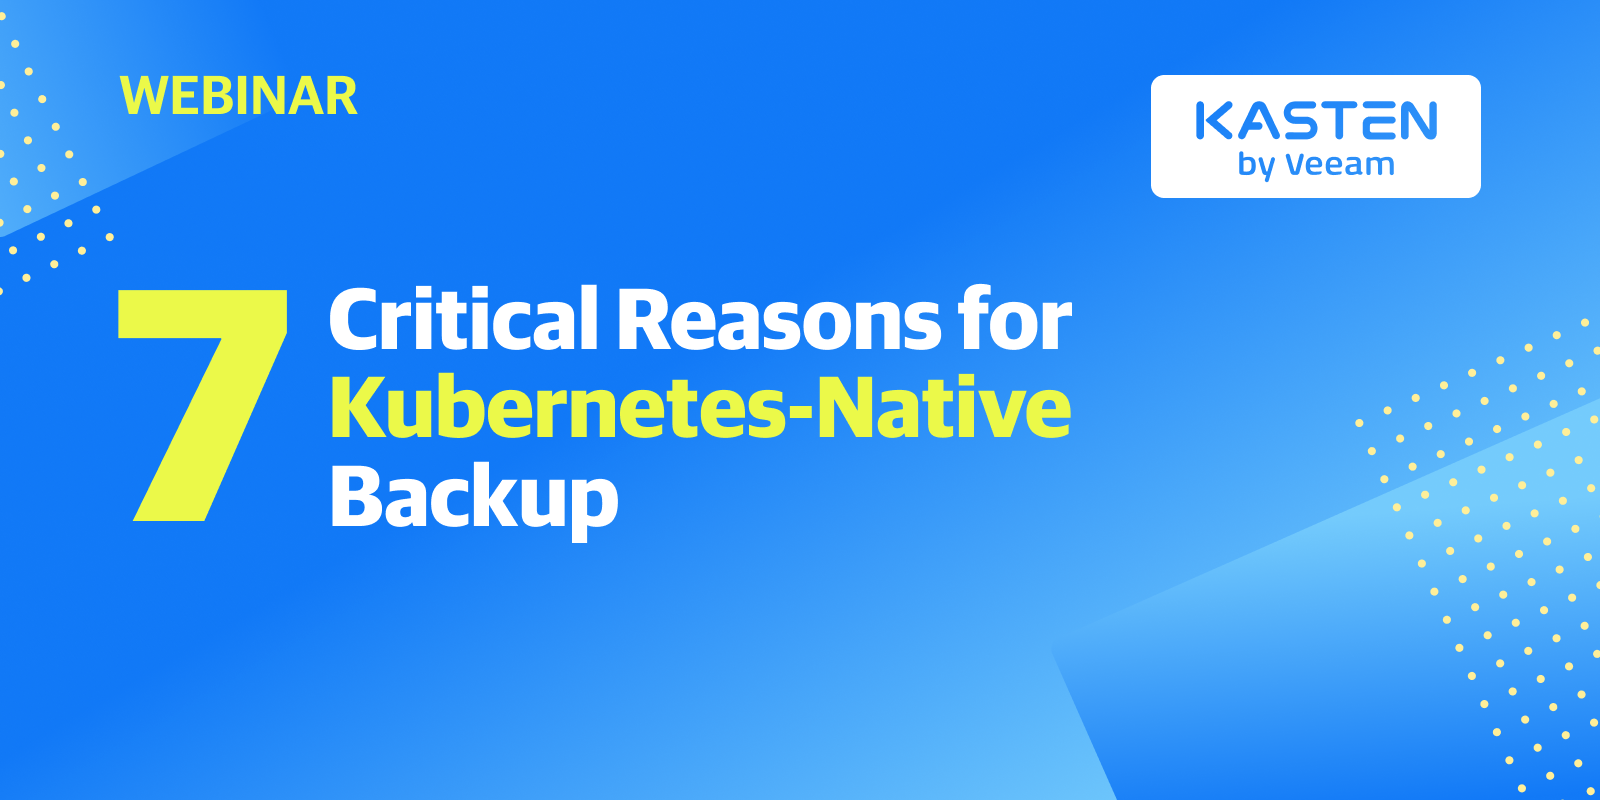 7 Critical Reasons for Kubernetes-Native Backup